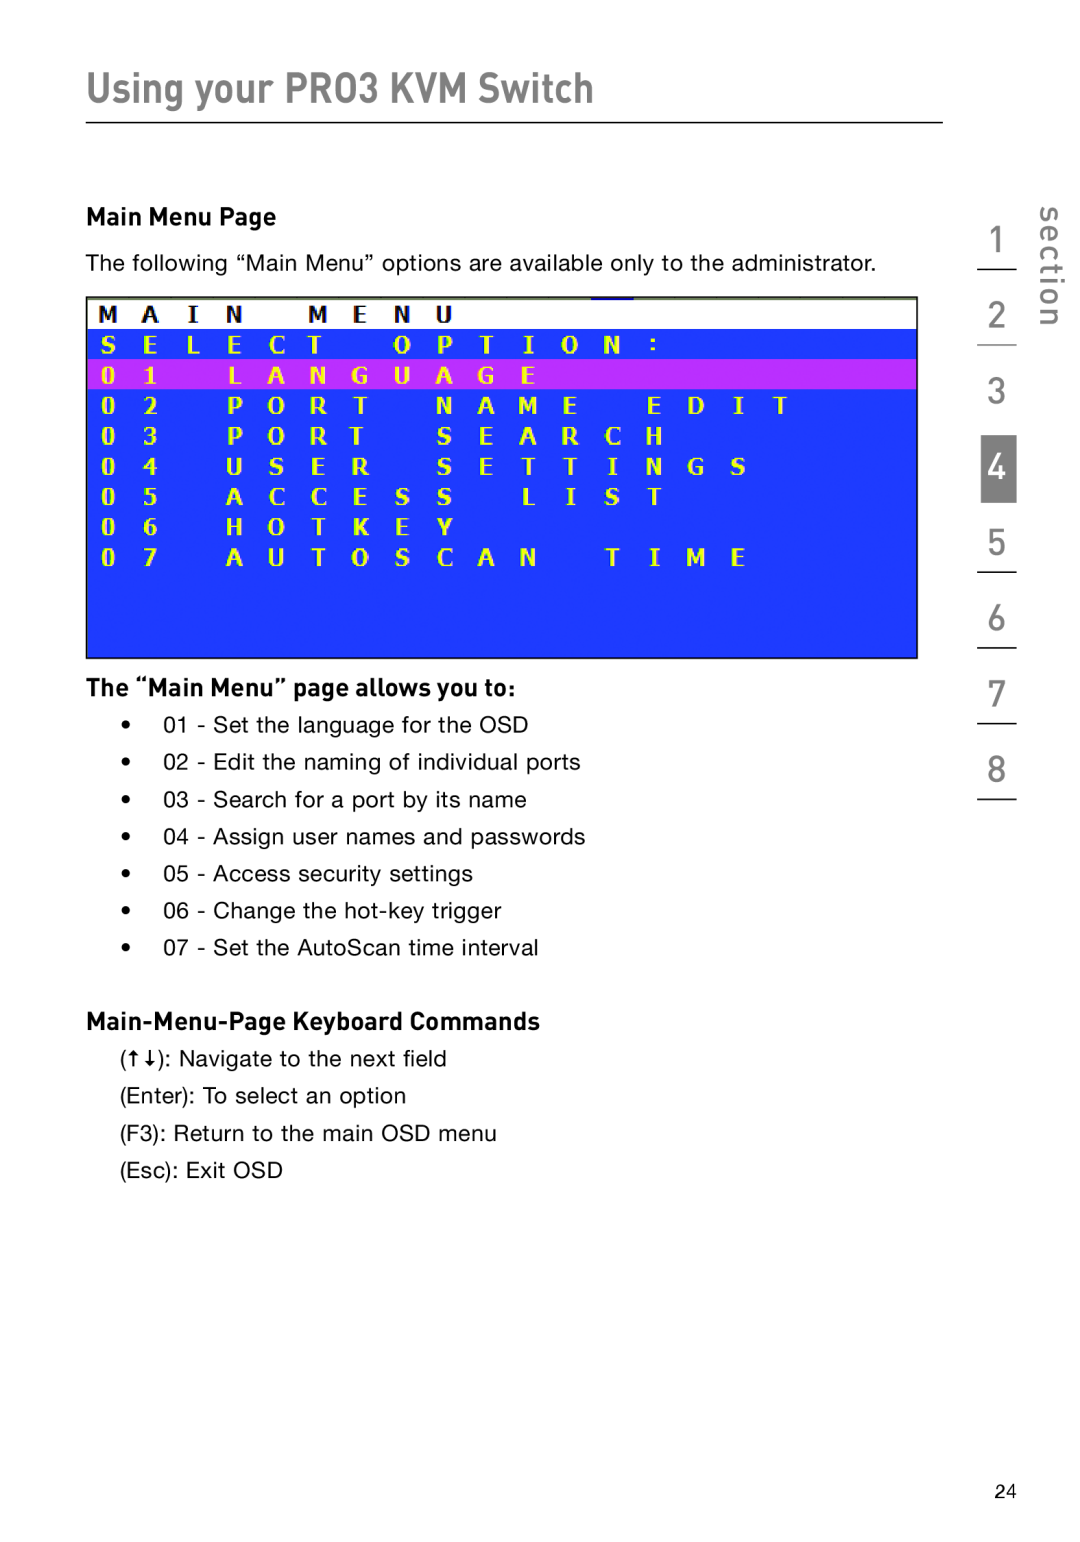 Belkin F1DA208Z manual Main Menu Page, The “Main Menu” page allows you to, Main-Menu-Page Keyboard Commands, section 